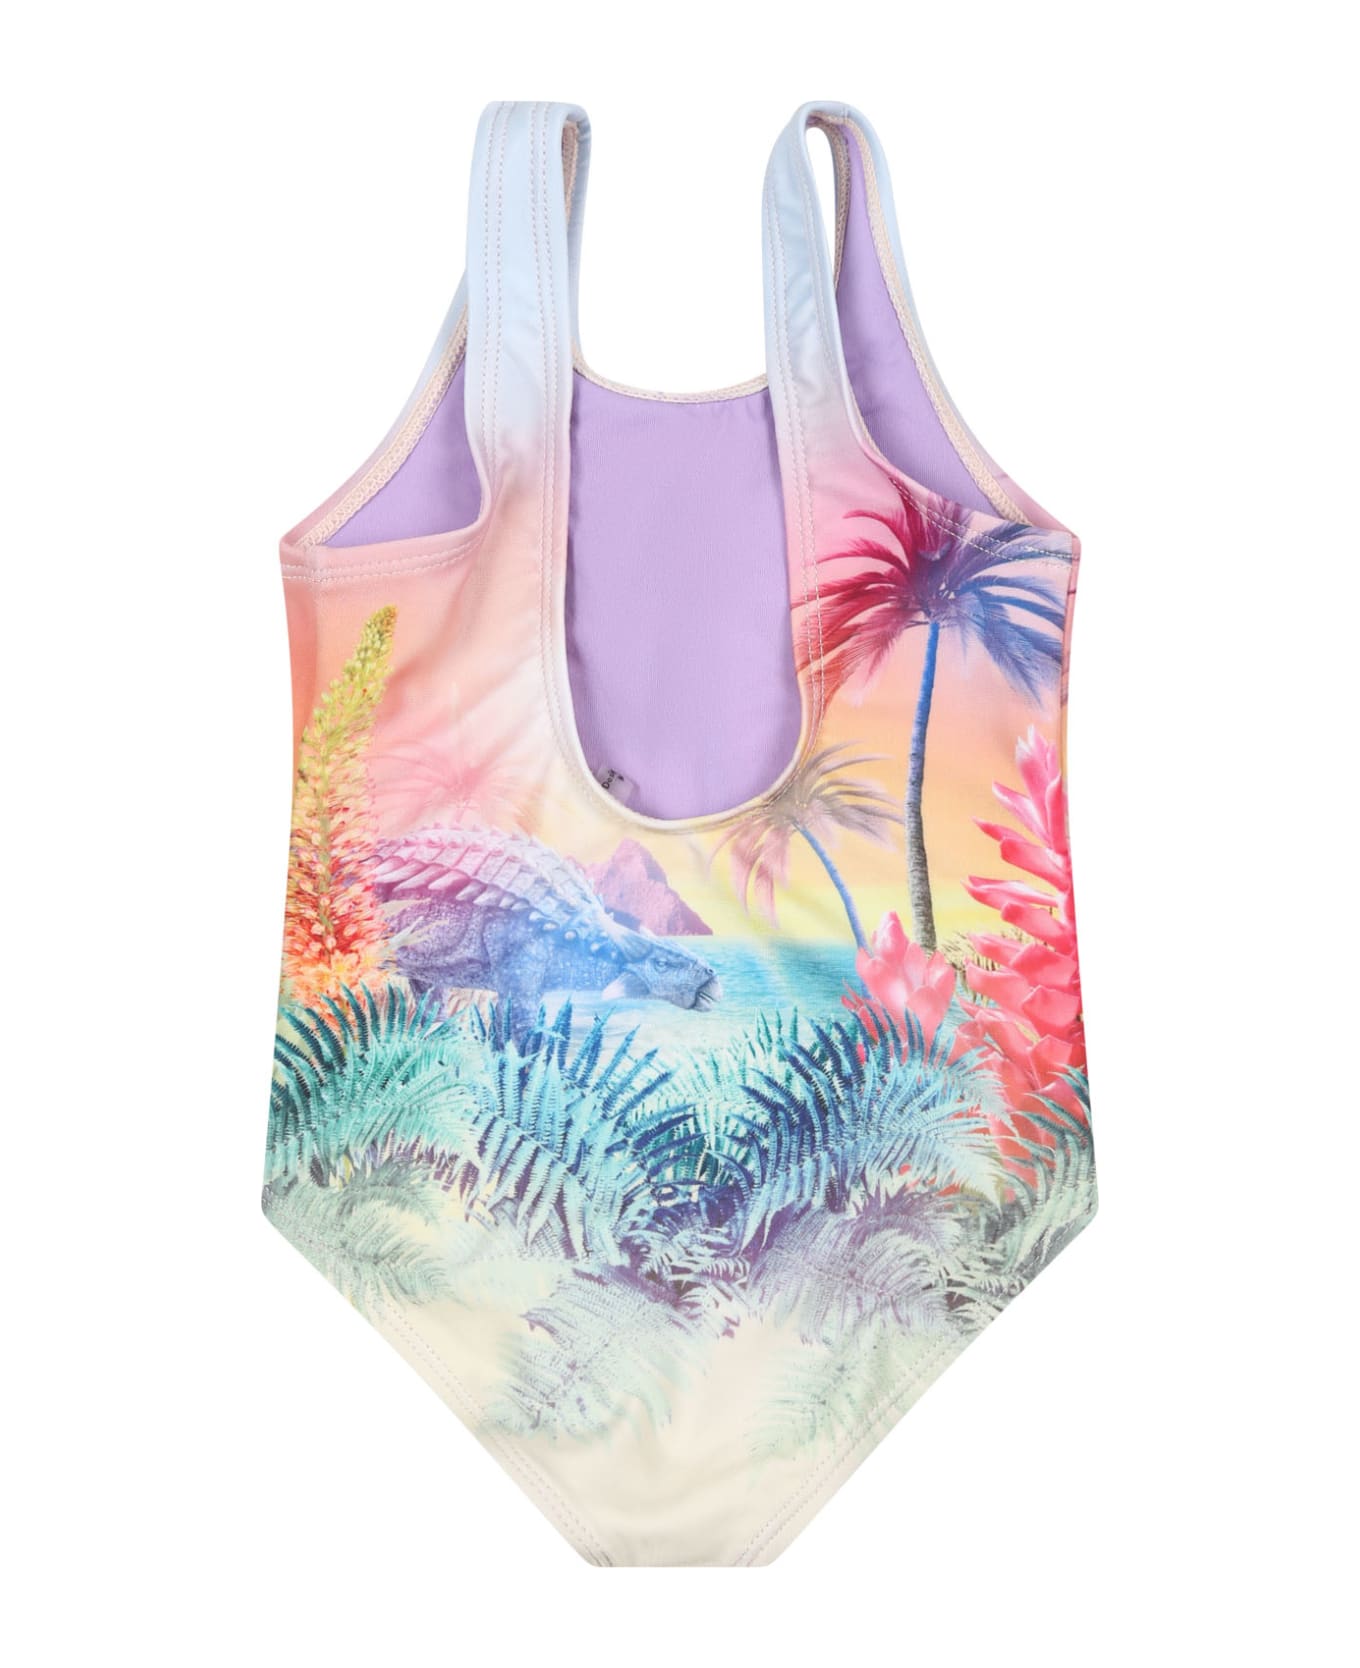 Molo Purple One-piece Swimsuit For Bebe Girl With Dinosaur Print - Multicolor 水着